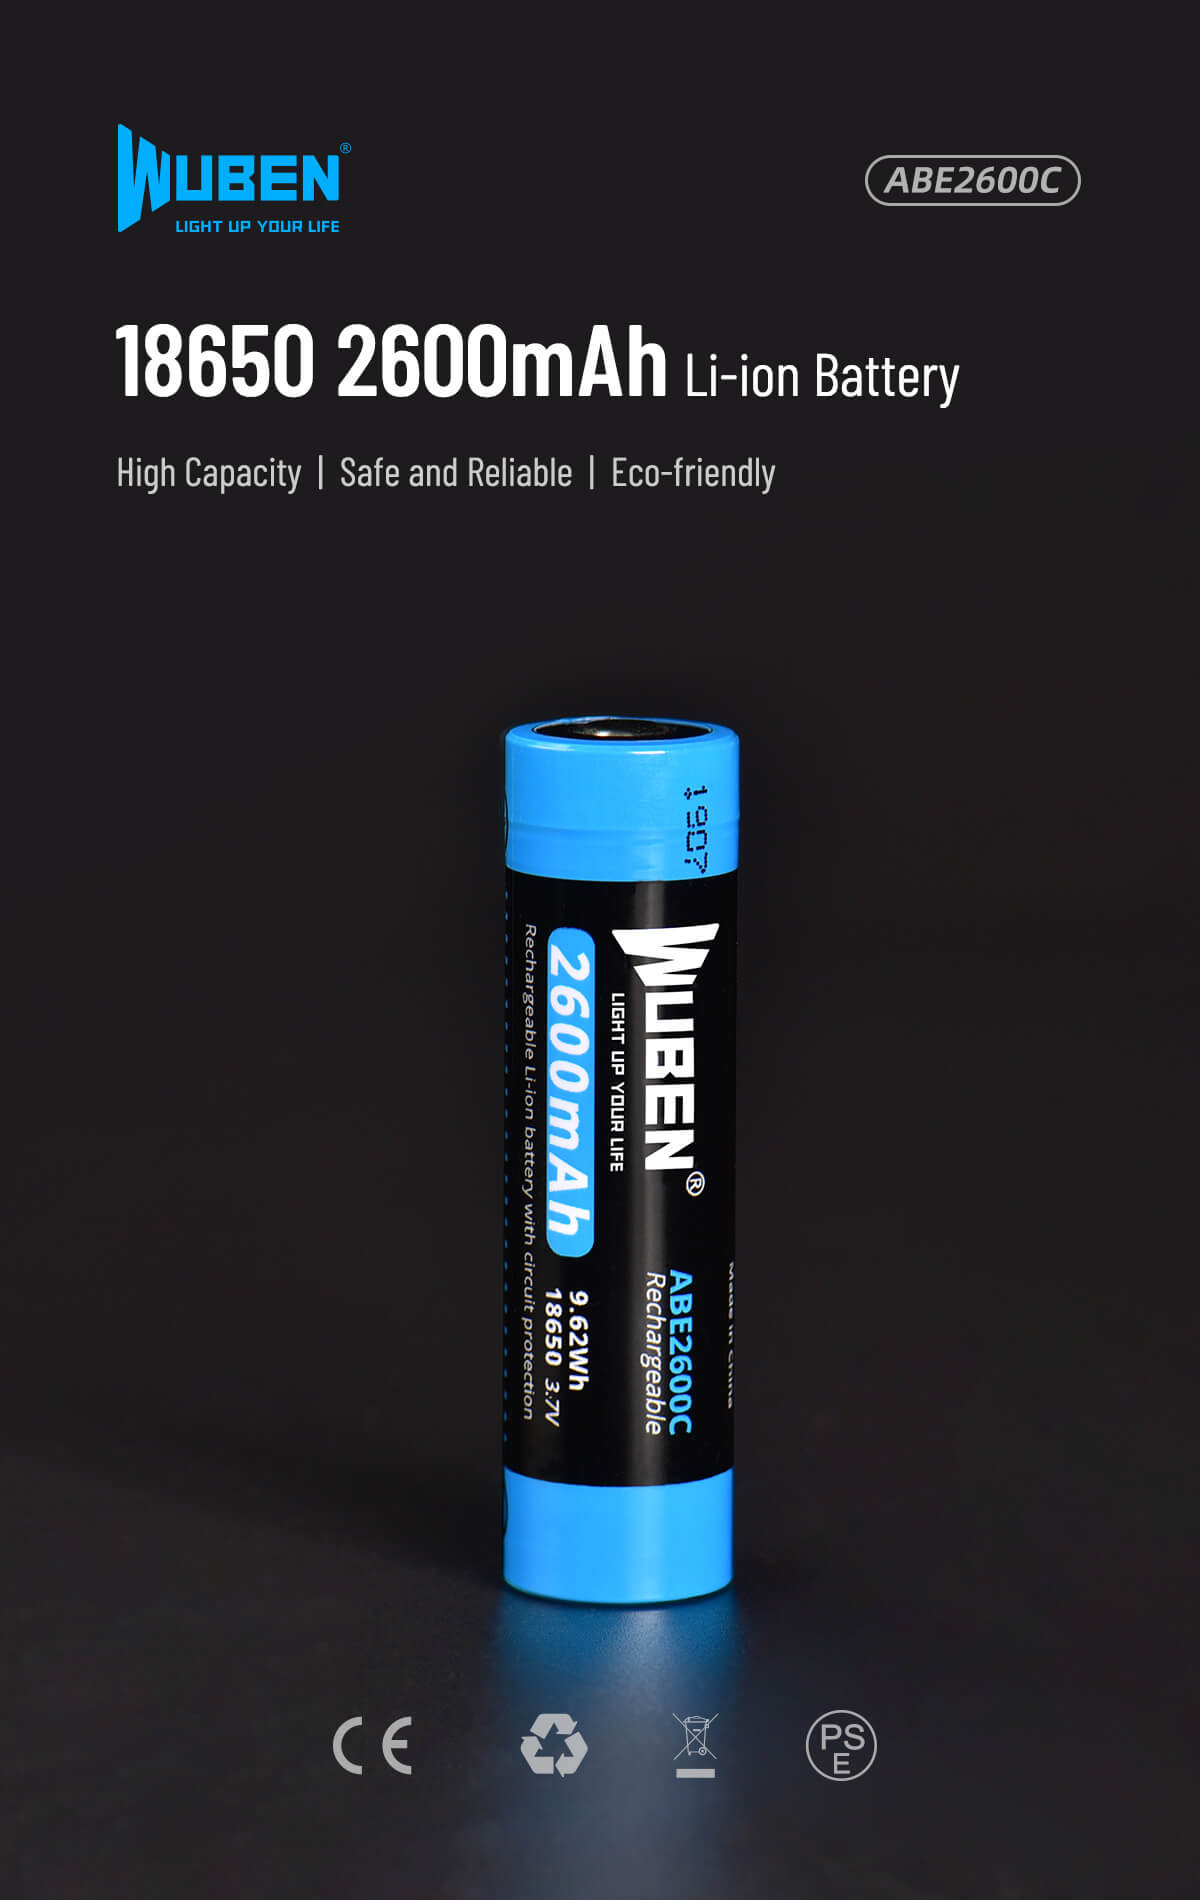 200701 Abe2600C En 01 2600Mah  Wuben 18650 Battery For Flashlight, Gimbal And Streetlights